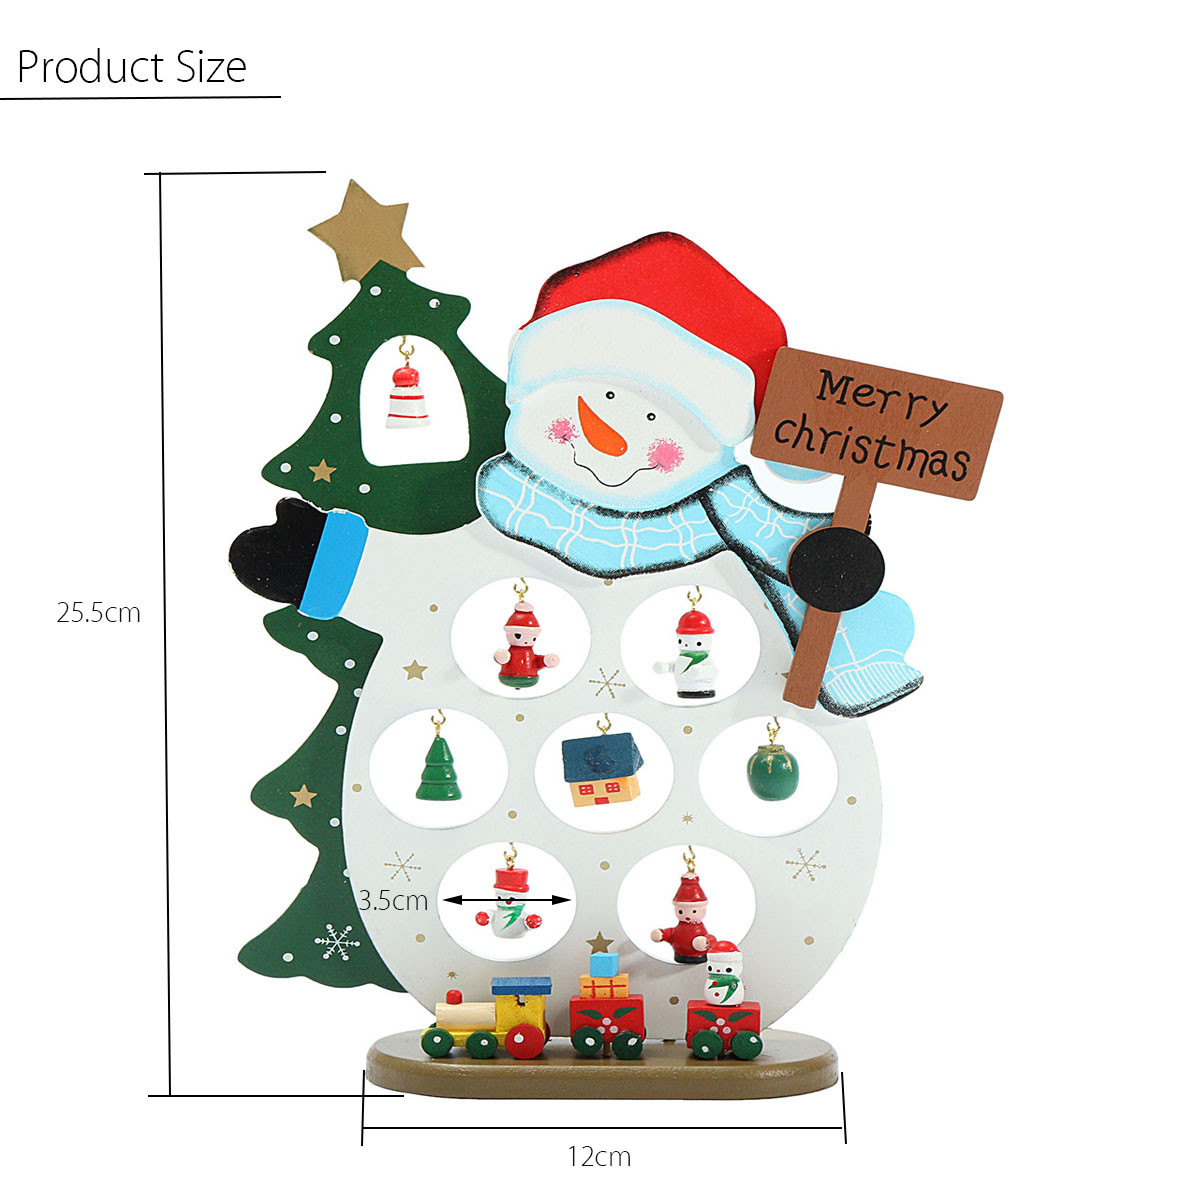 Wooden-Christmas-Snowman-Ornament-Christmas-Decoration-Pendant-Desktop-Decoration-Gift-for-Children--1220161-1